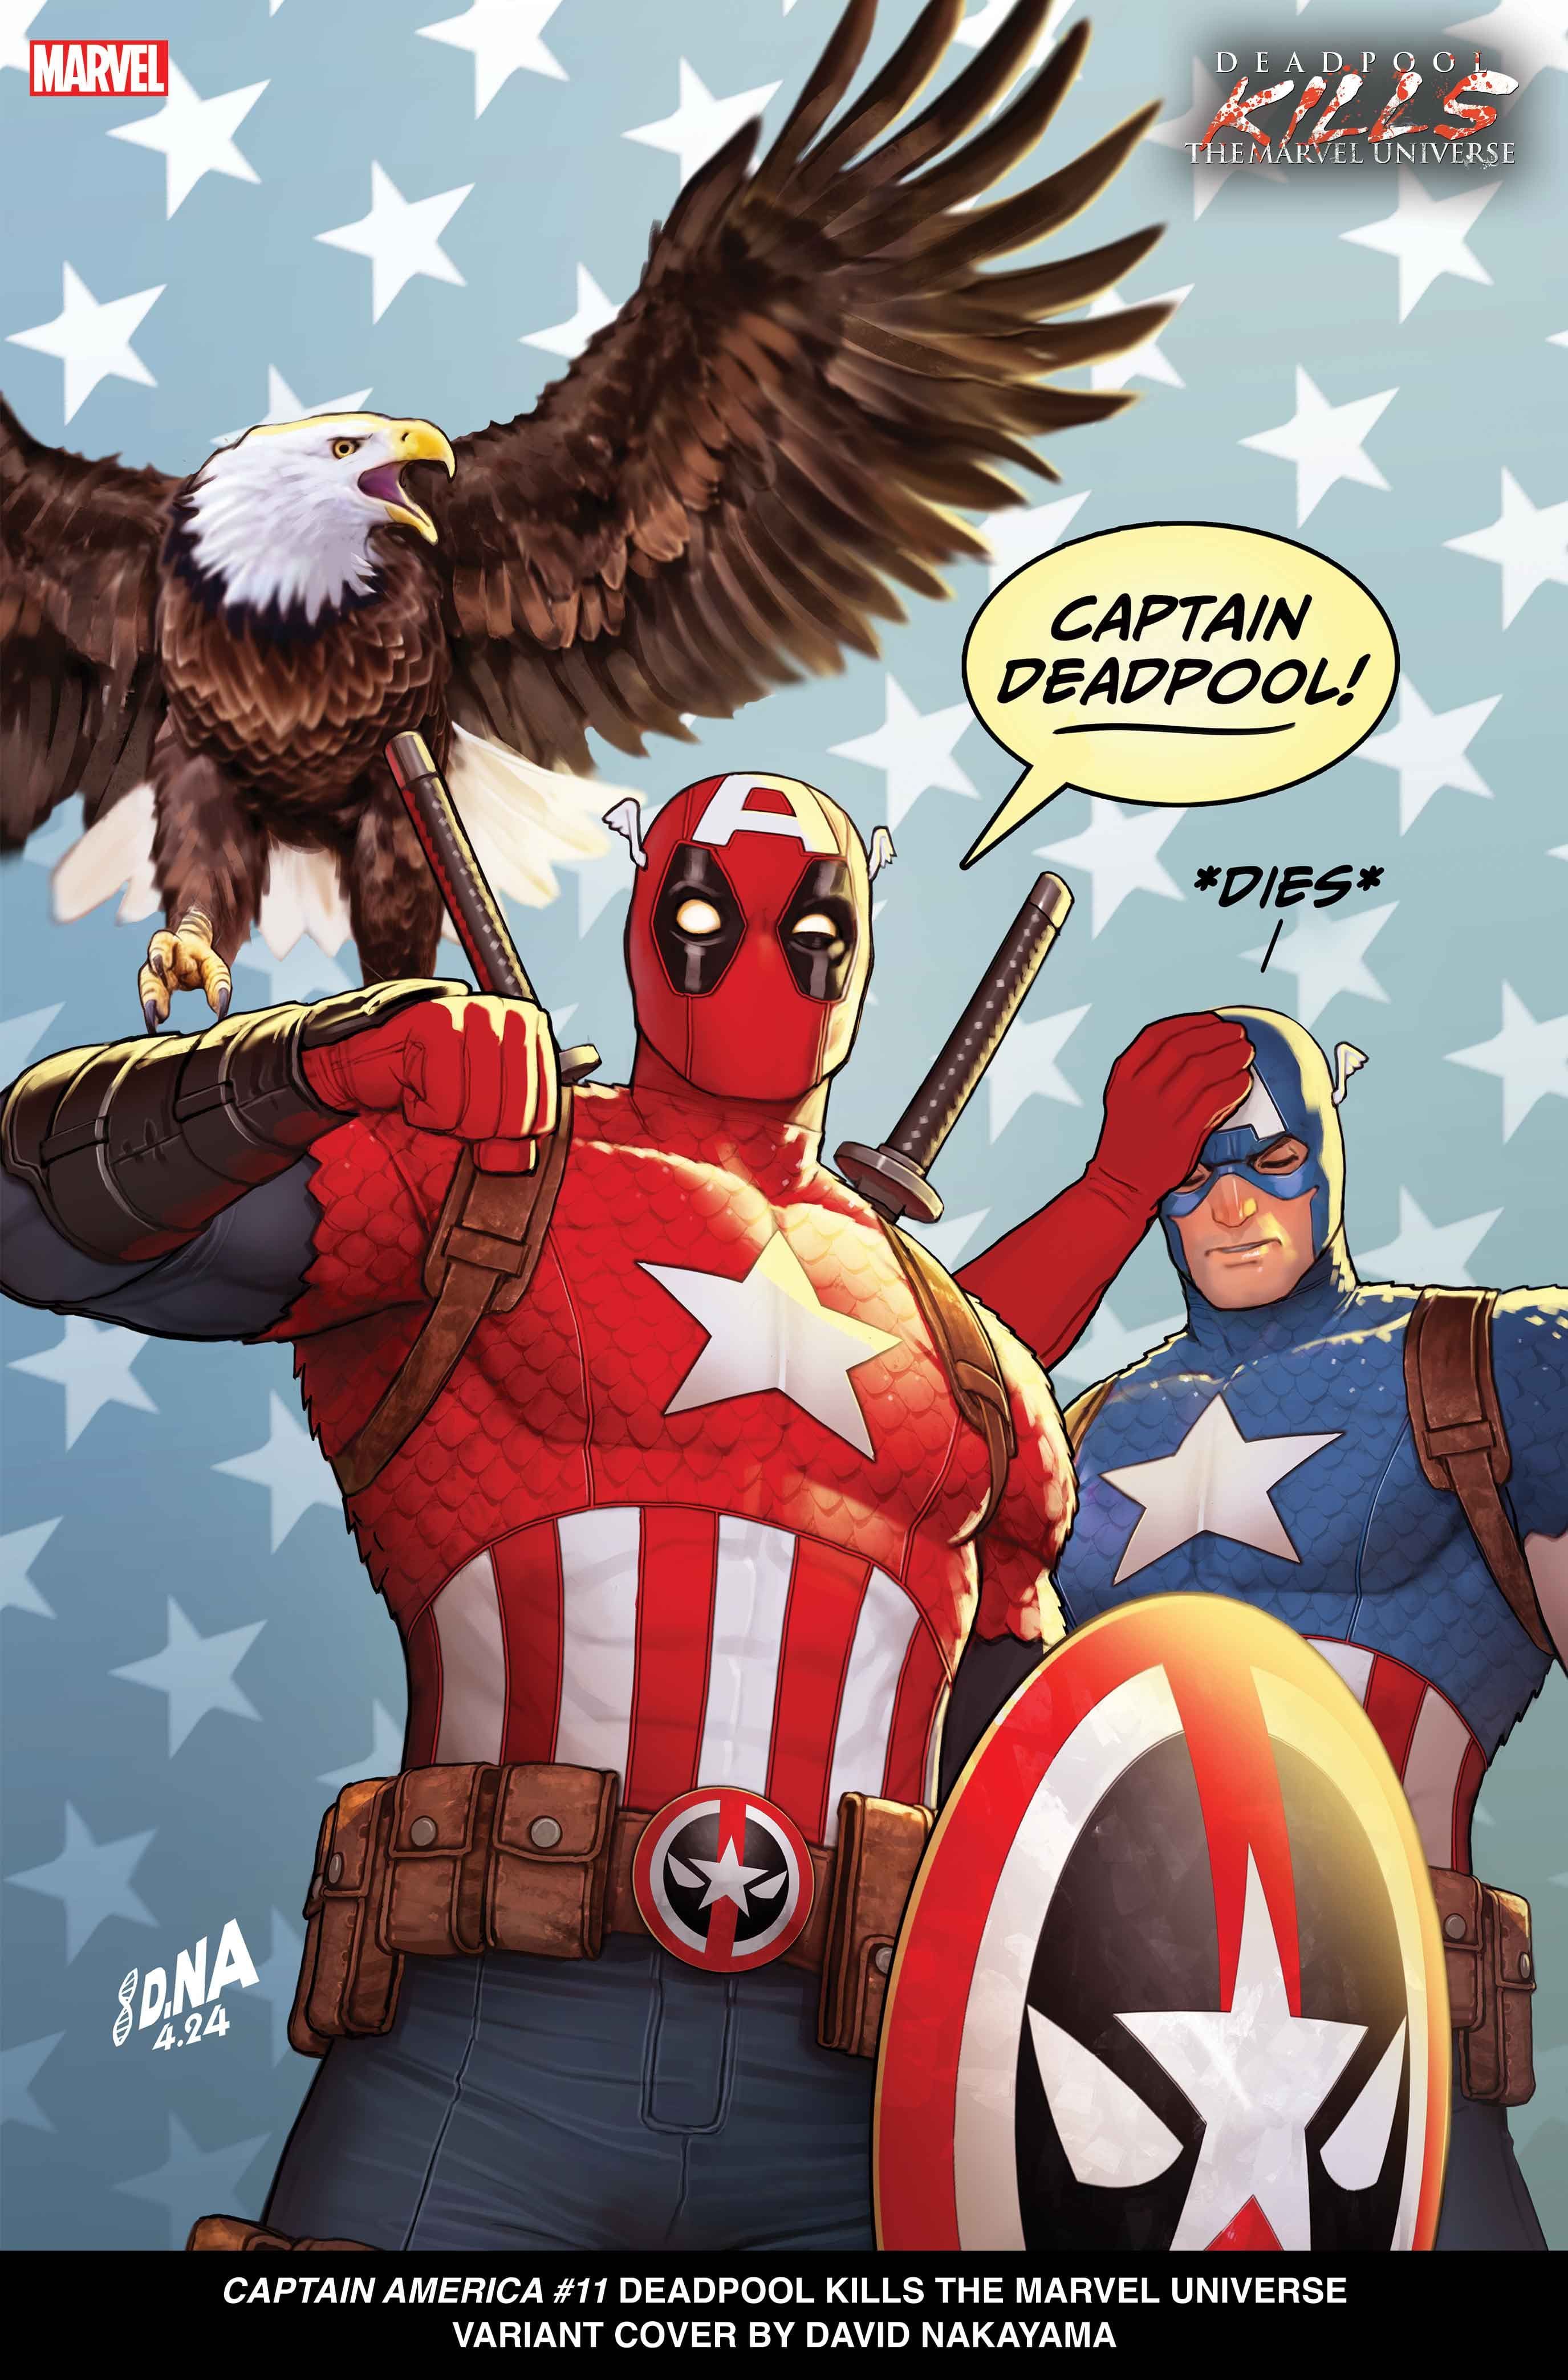 CAPTAIN AMERICA #11 Deadpool Kills the Marvel Universe Variant Cover by David Nakayama